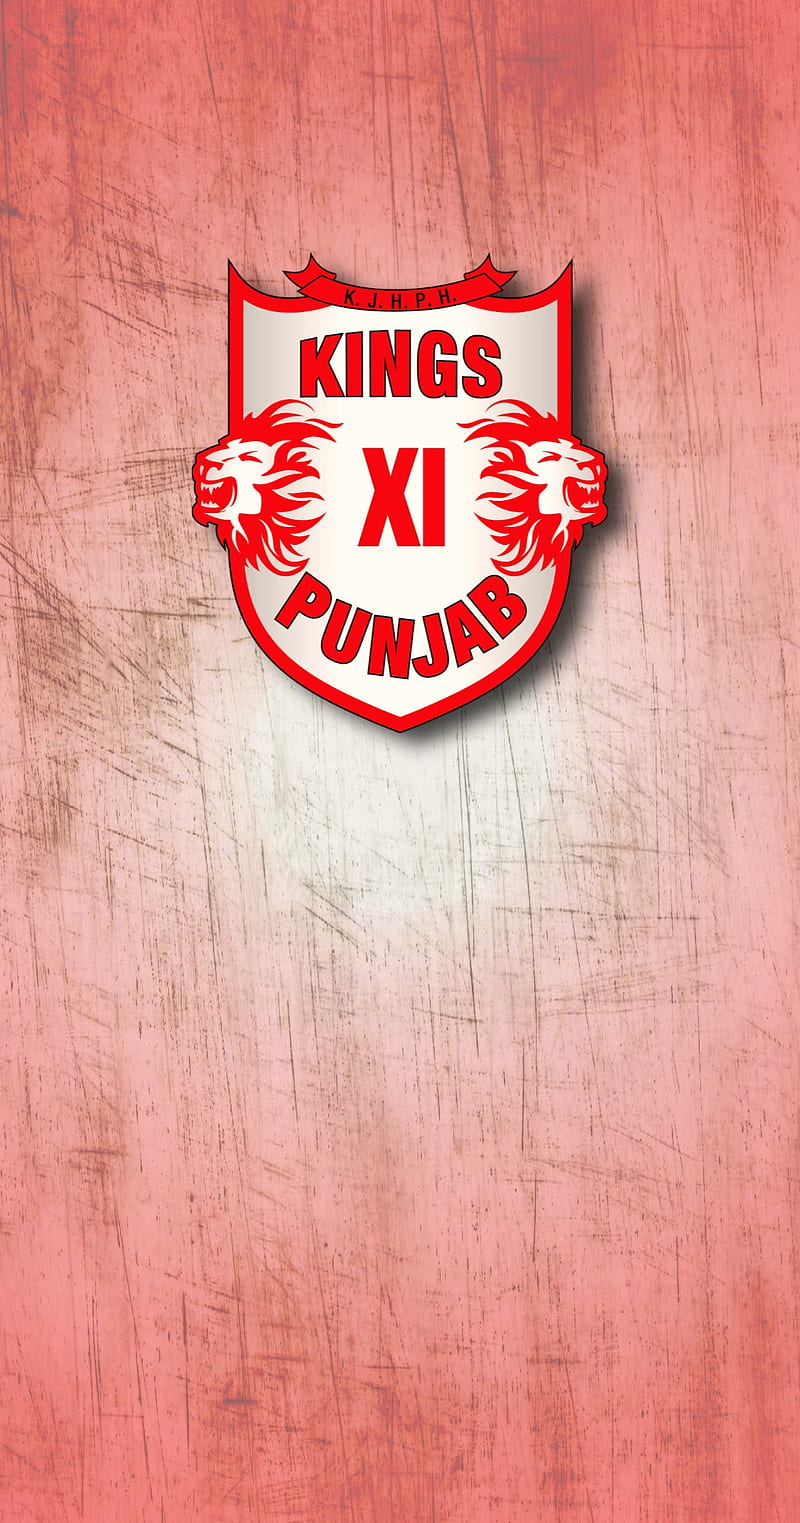 Mumbai Indians vs Punjab Kings Match 31, Dream 11 Prediction, Fantasy  Cricket